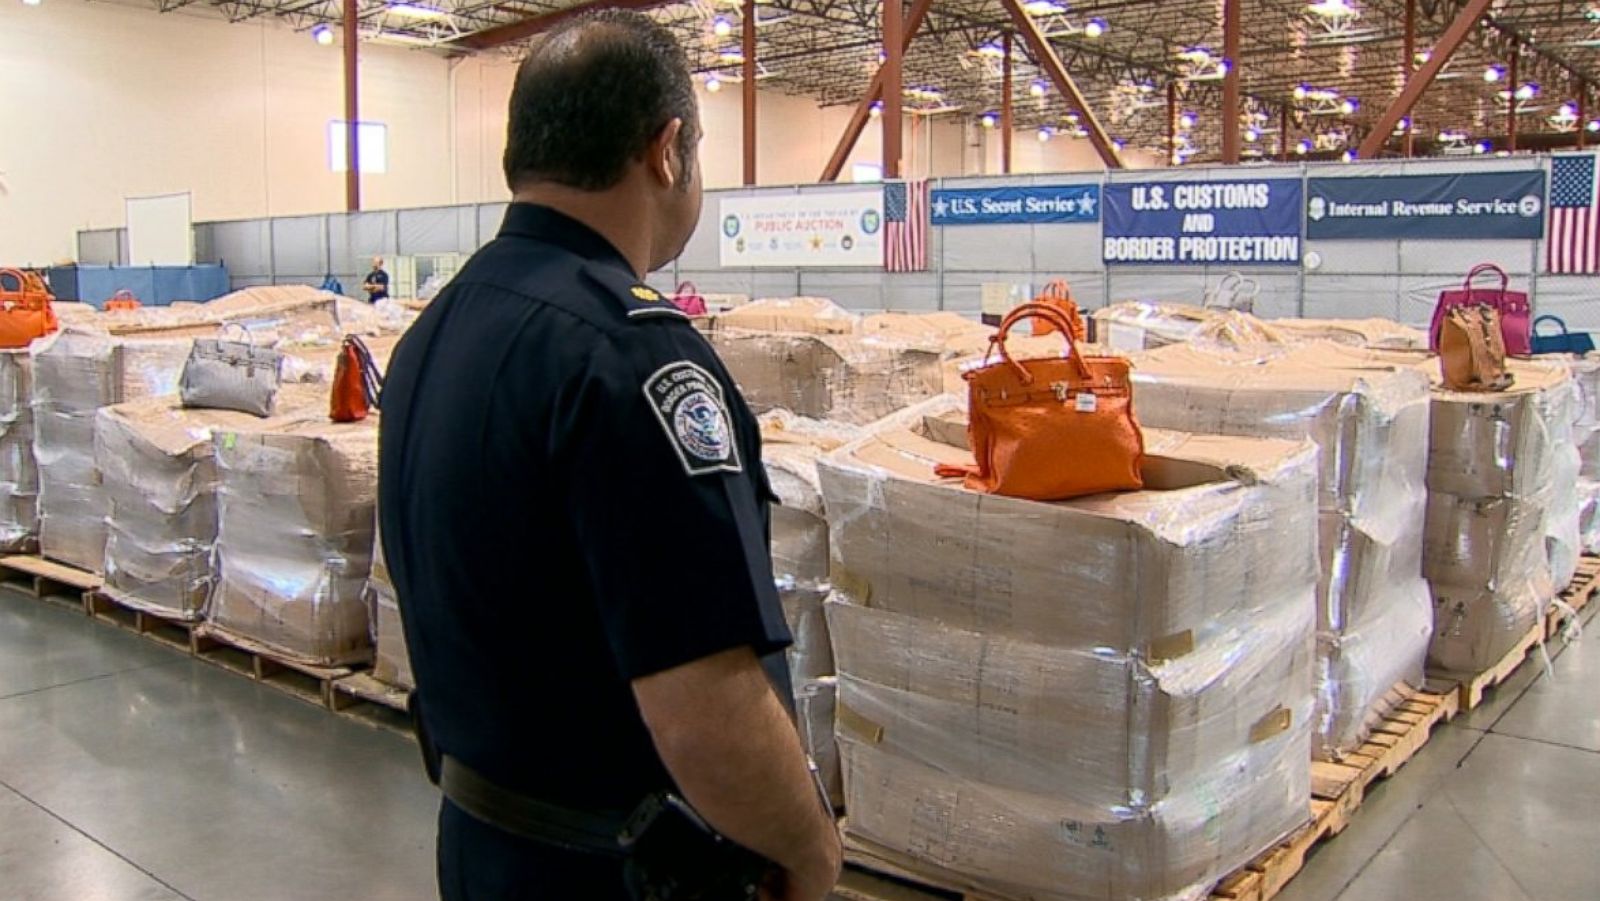 U.S. CBP seizes counterfeit goods, including panties, at Blue